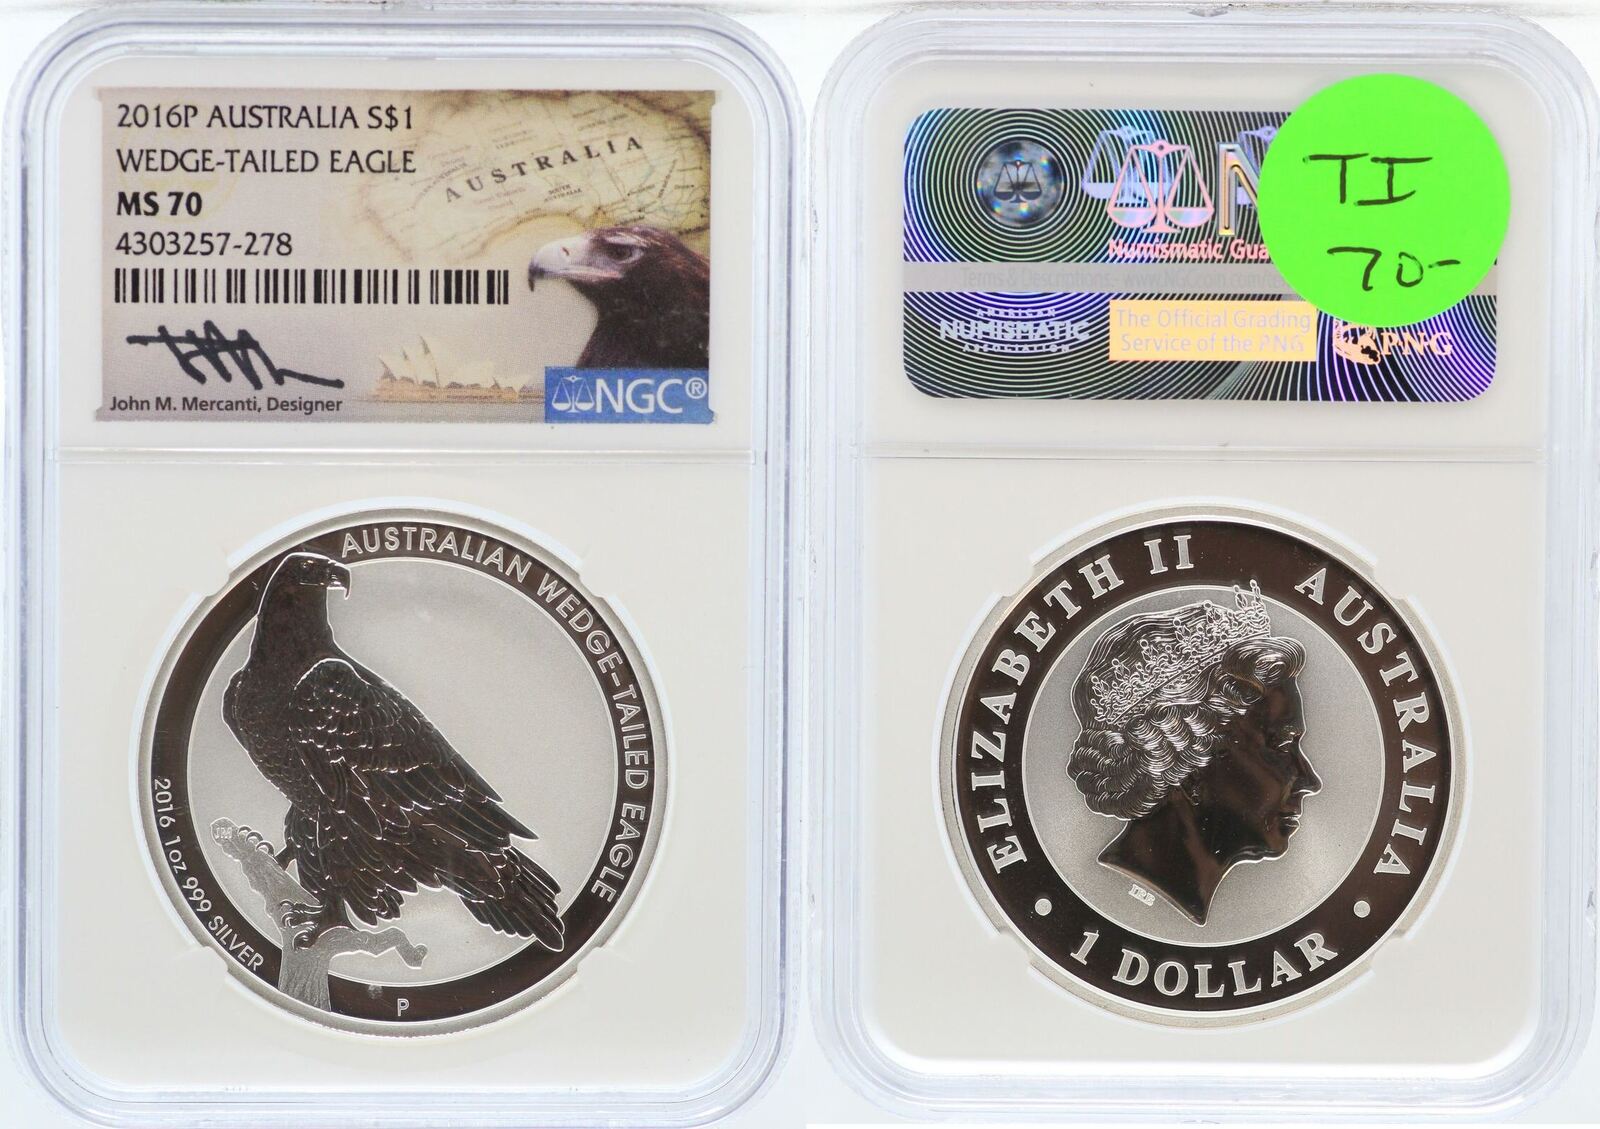 2016 P $1 AUD 1 oz .999 Fine Silver Wedge-Tailed Eagle NGC MS70 John M Mercanti 